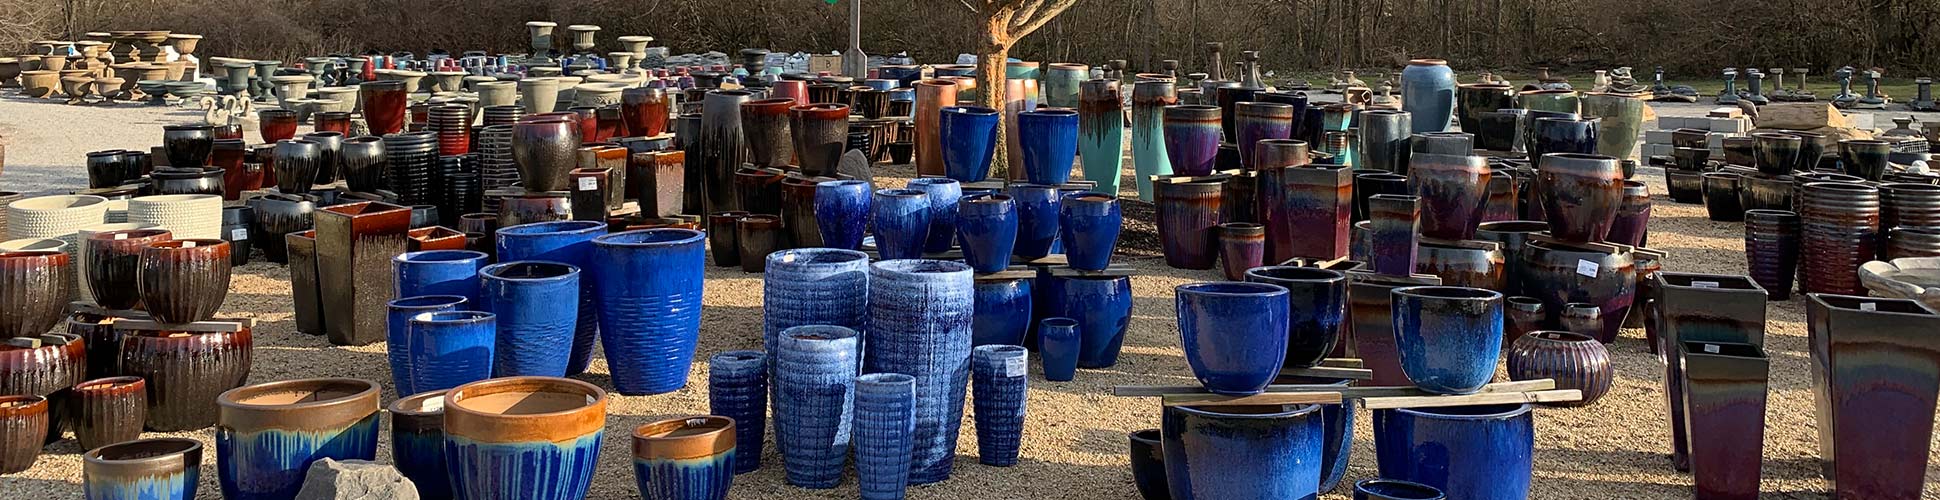 Selection of blue pottery planters at Aquatic & Garden Decor in Cincinnati